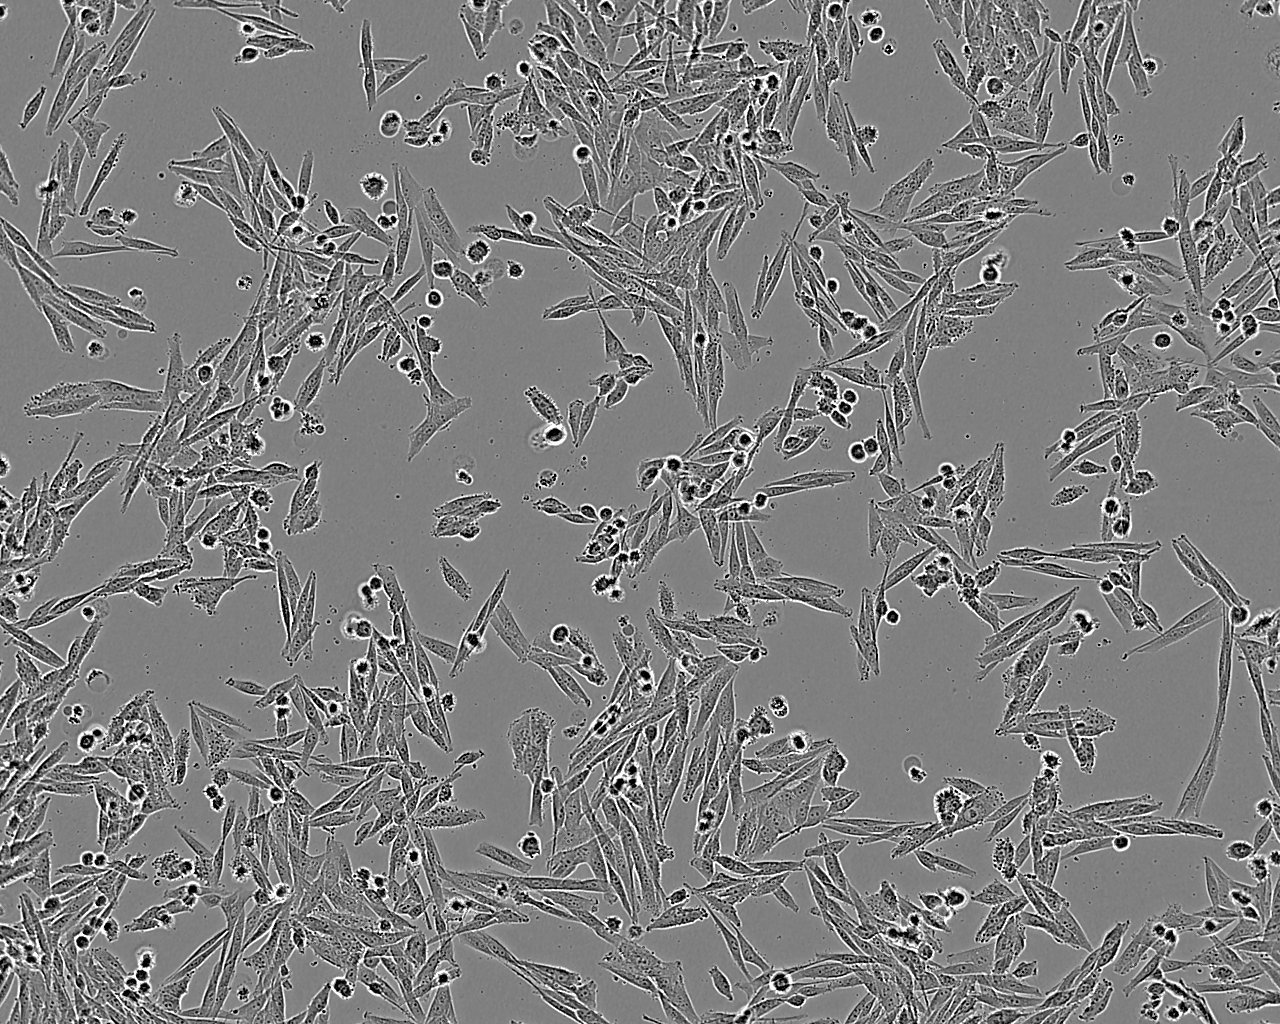 K1 epithelioid cells人甲状腺癌细胞系,K1 epithelioid cells